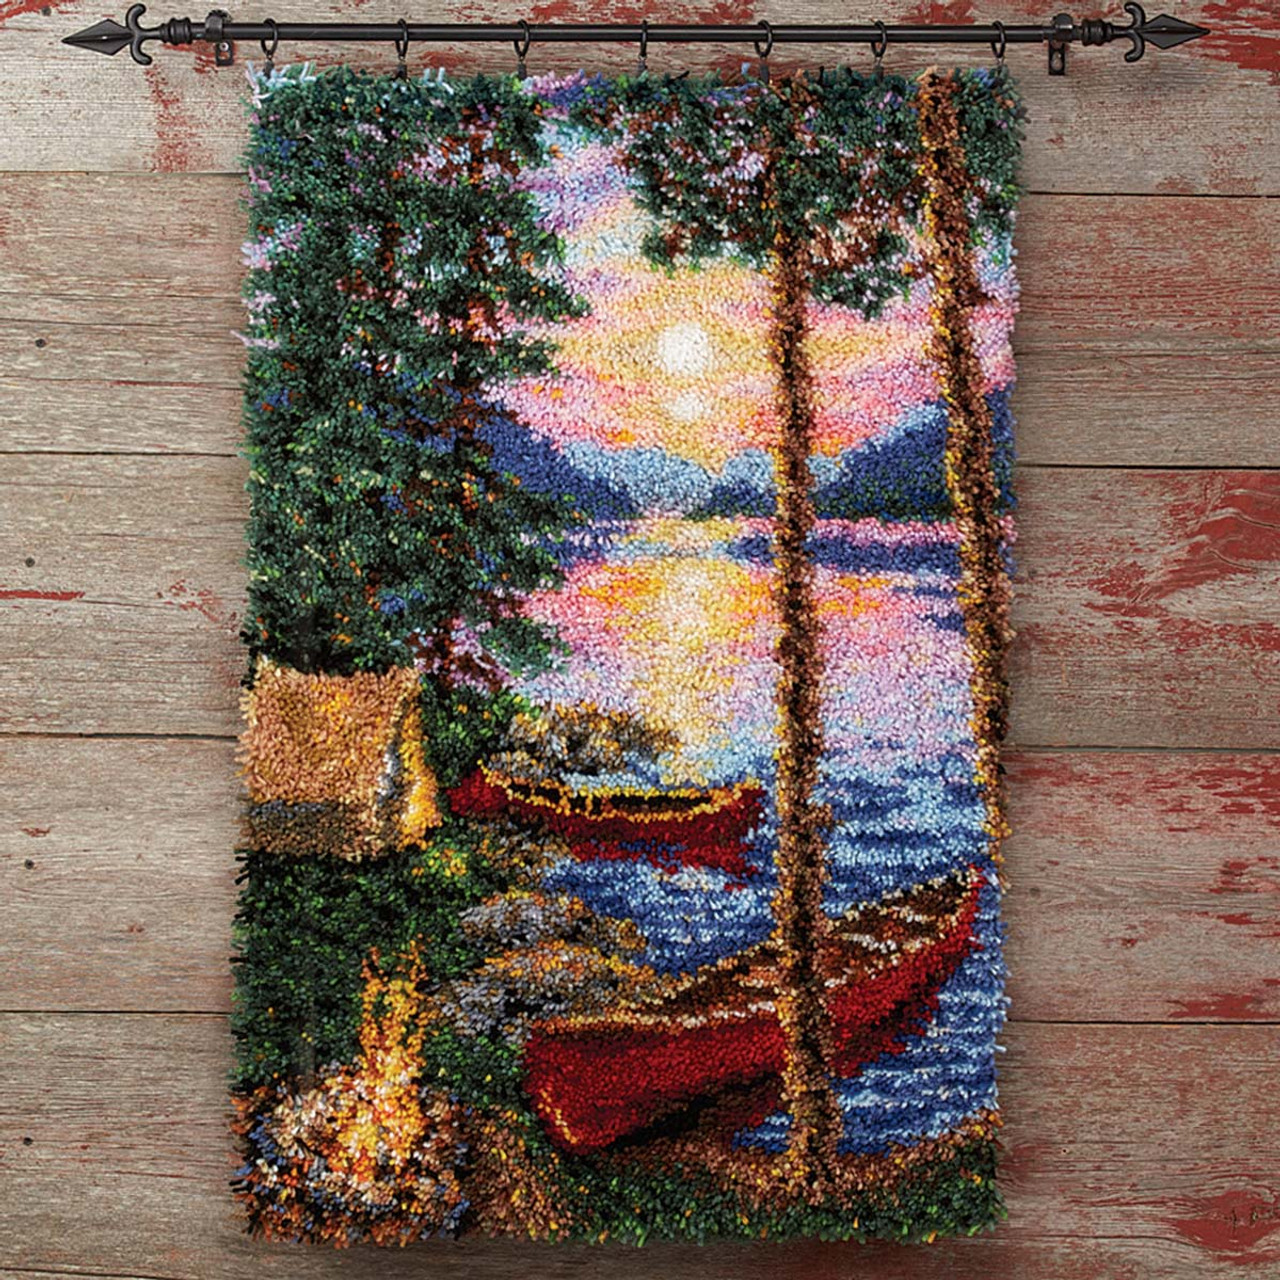 Sunset Vibes Latch Hook Kit By Leisure Arts – The Happy Cross Stitcher